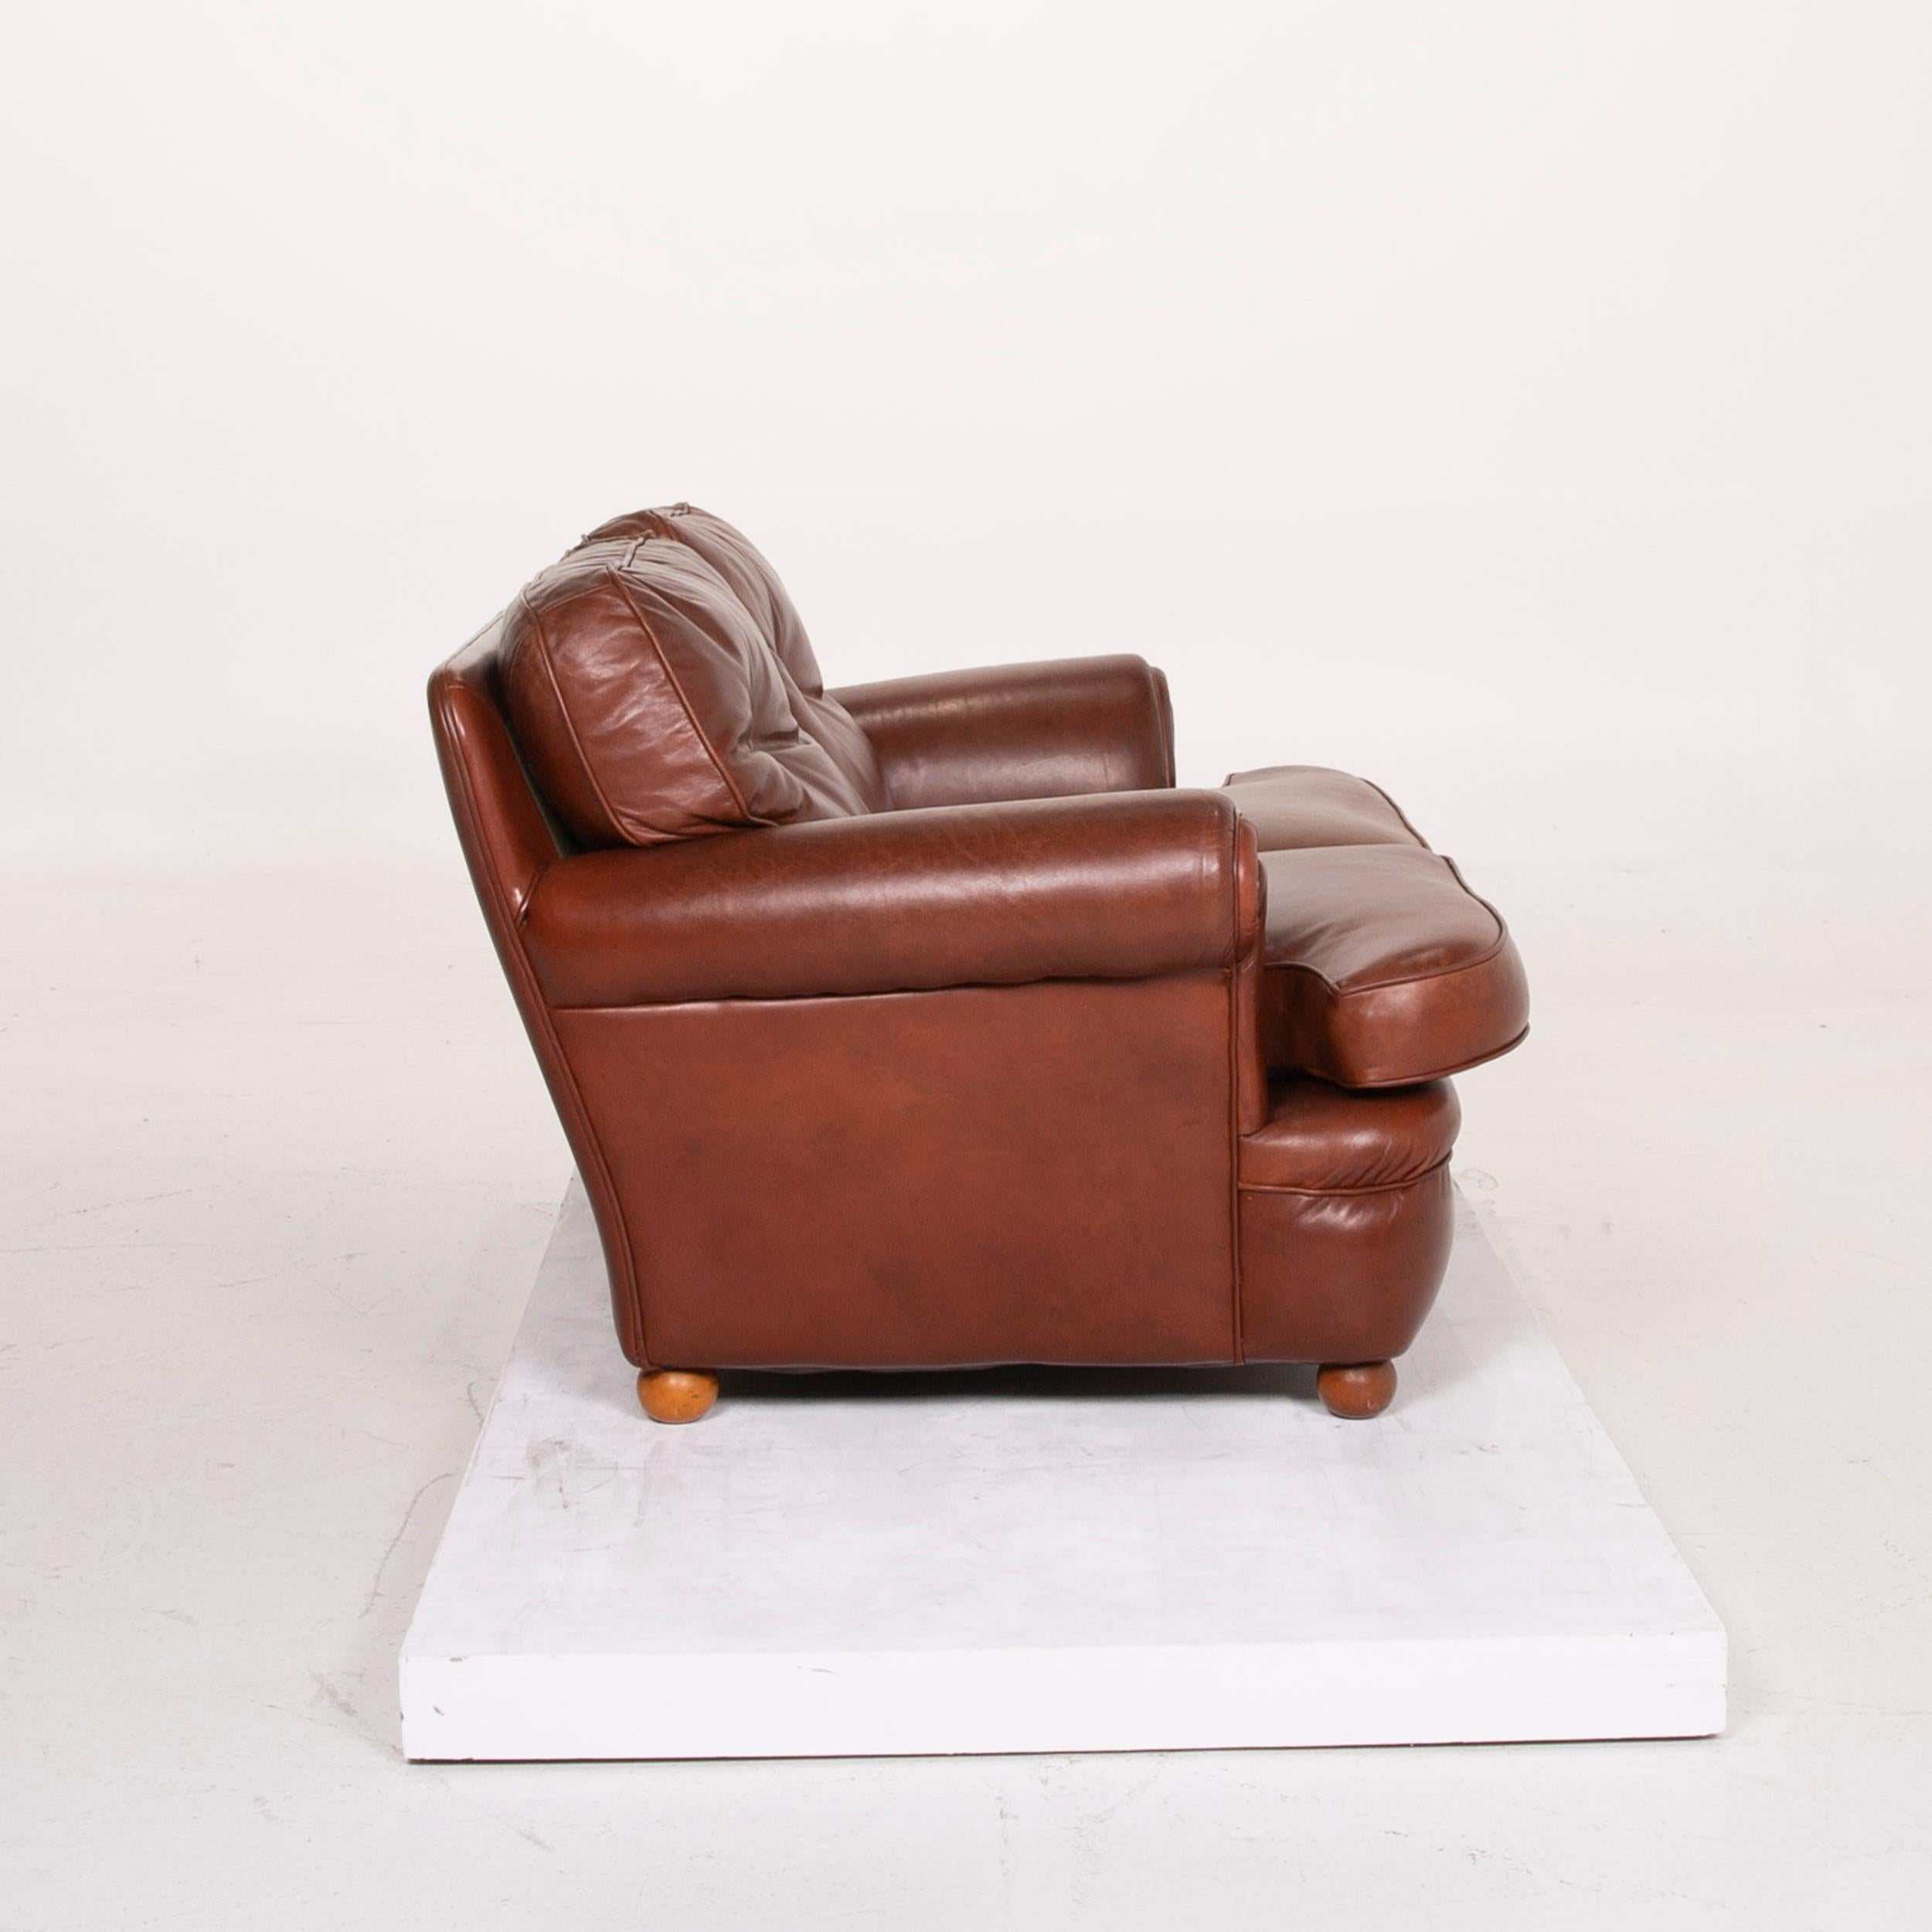 Poltrona Frau Leather Sofa Set Cognac Two-Seat Stool For Sale 3